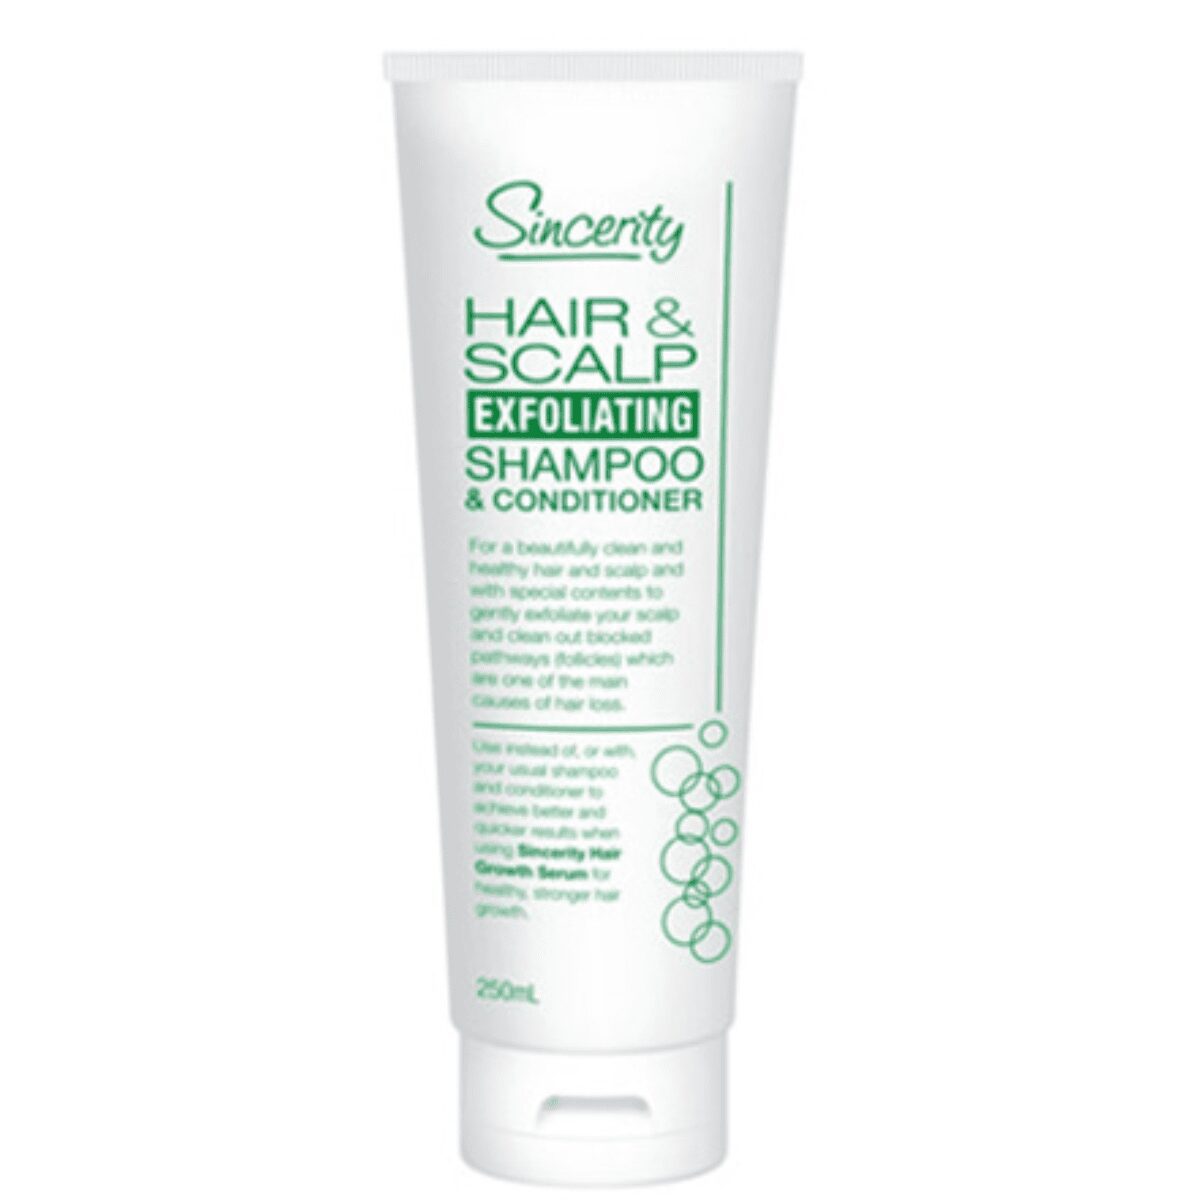 Sincerity Hair & Scalp Exfoliating Shampoo